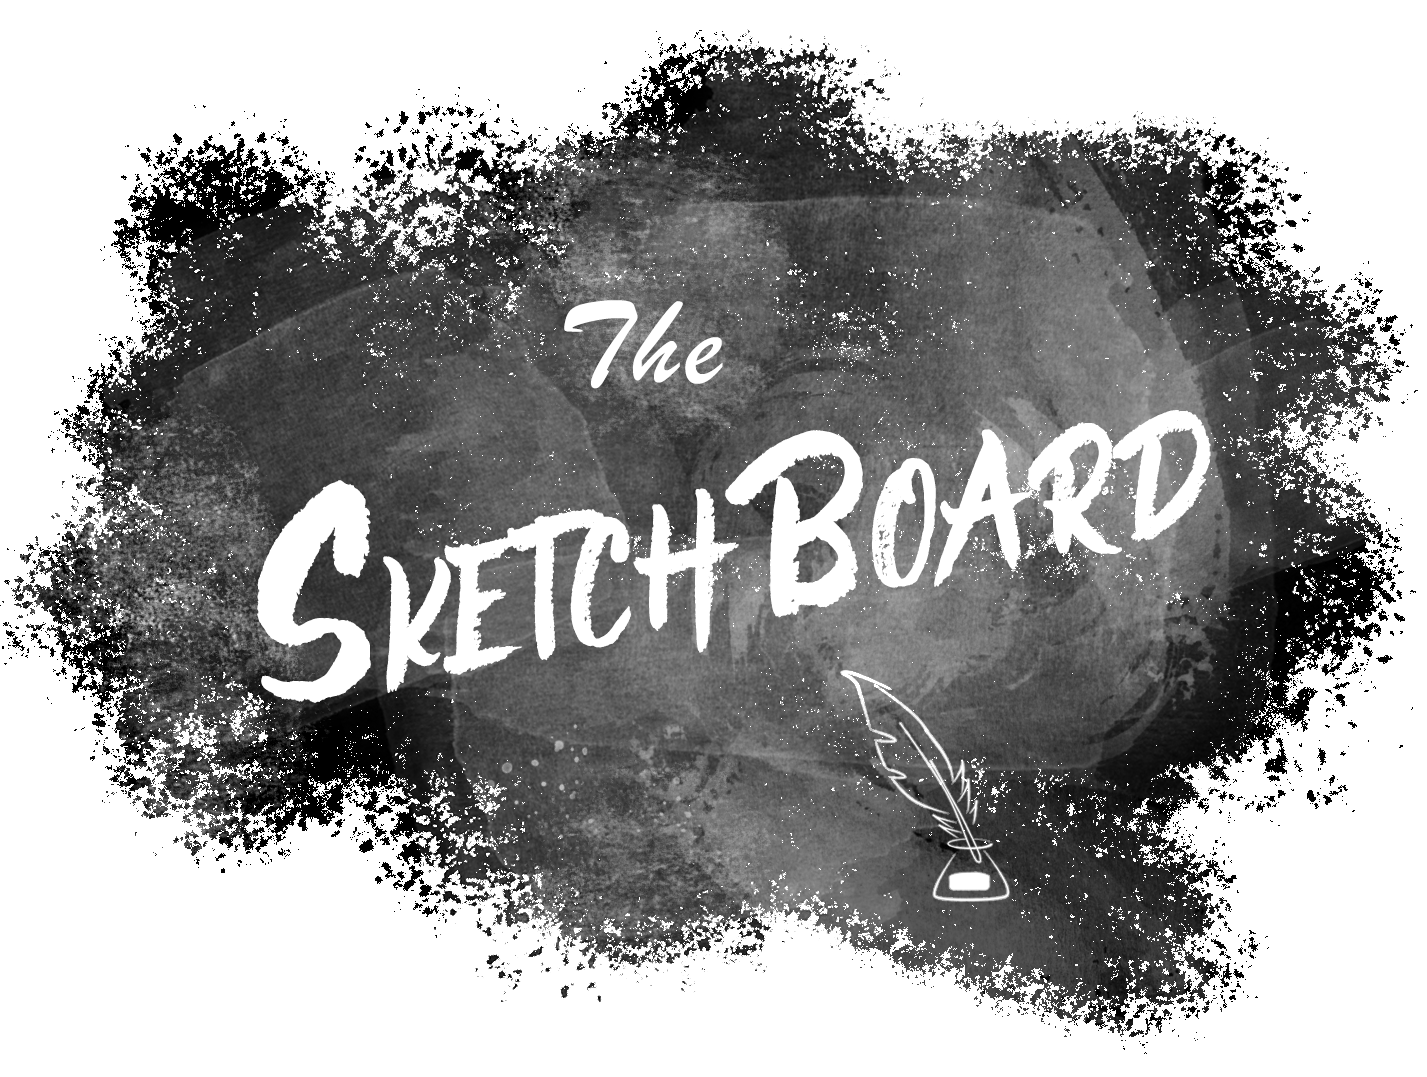 The SketchBoard